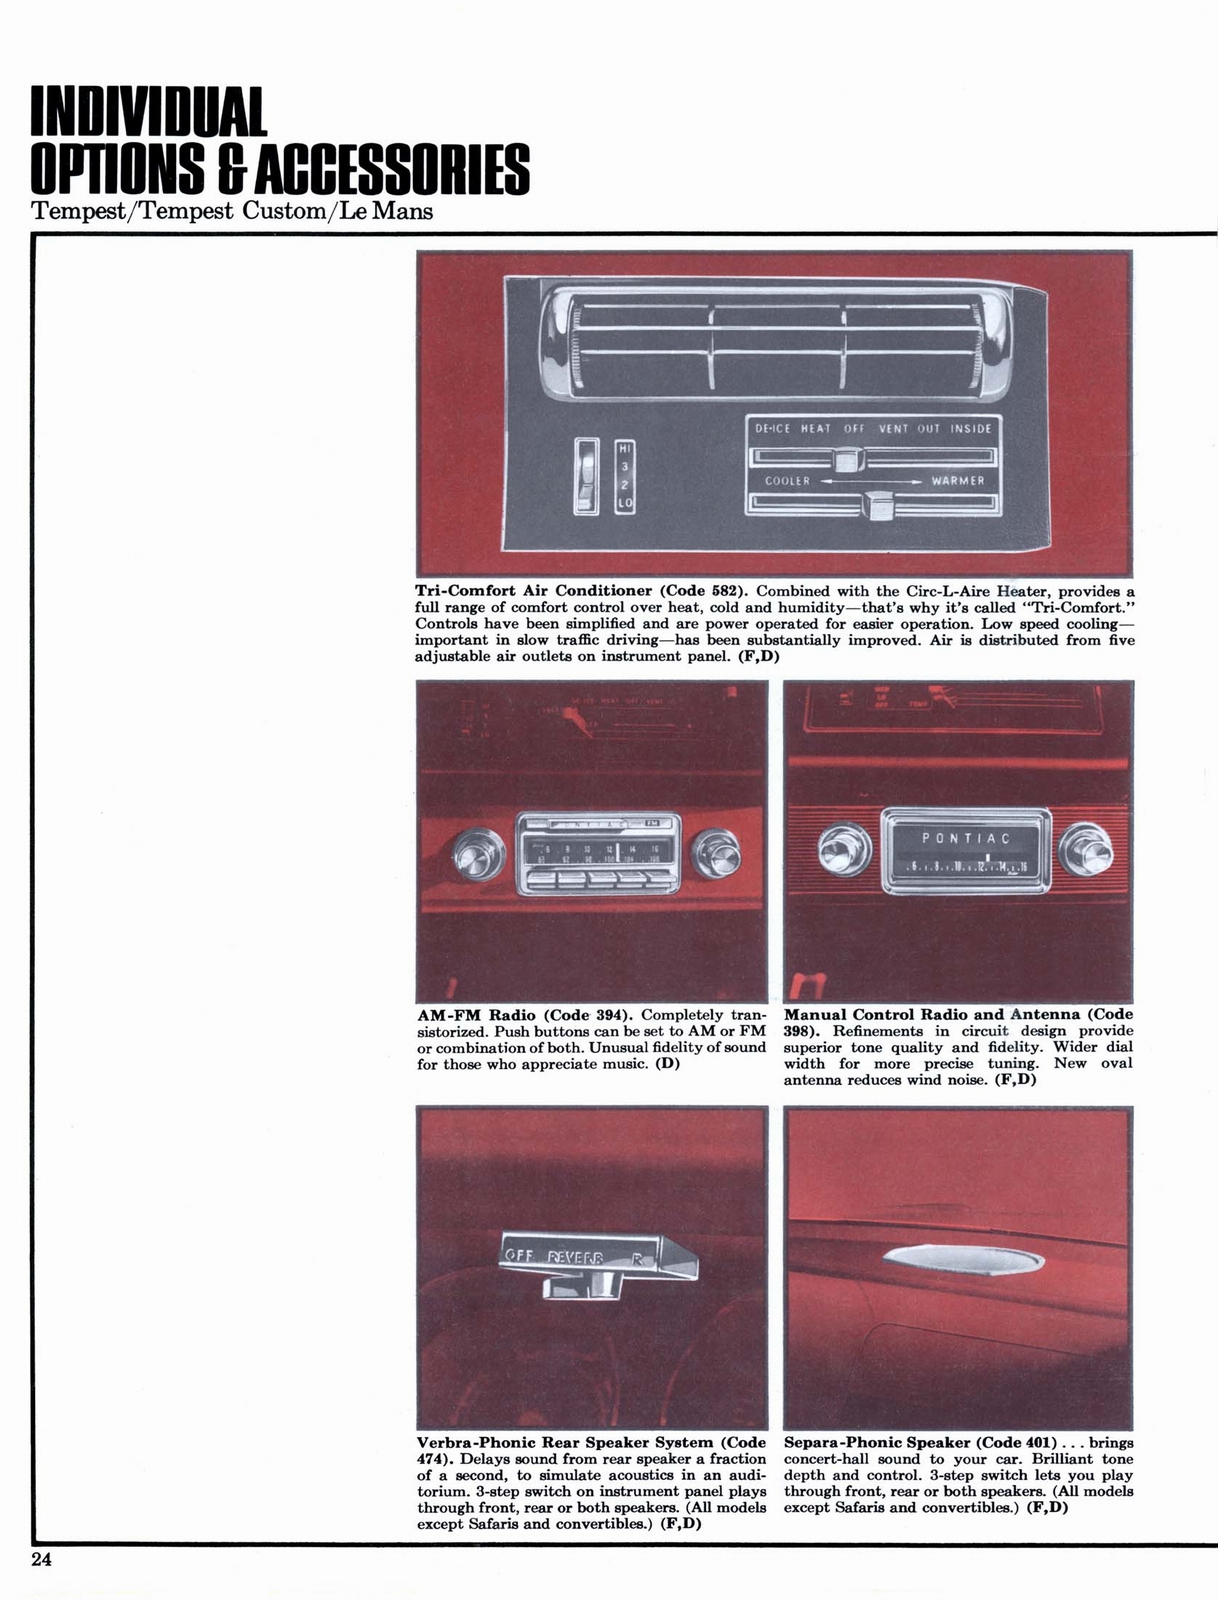 n_1965 Pontiac Accessories Catalog-24.jpg